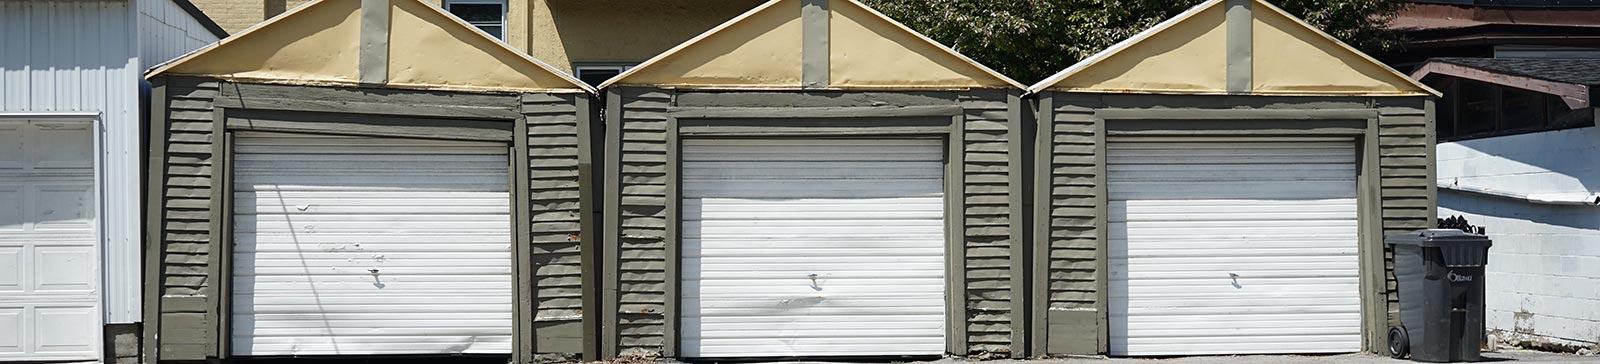 Garage Door Maintenance Near Me | Chula Vista, CA